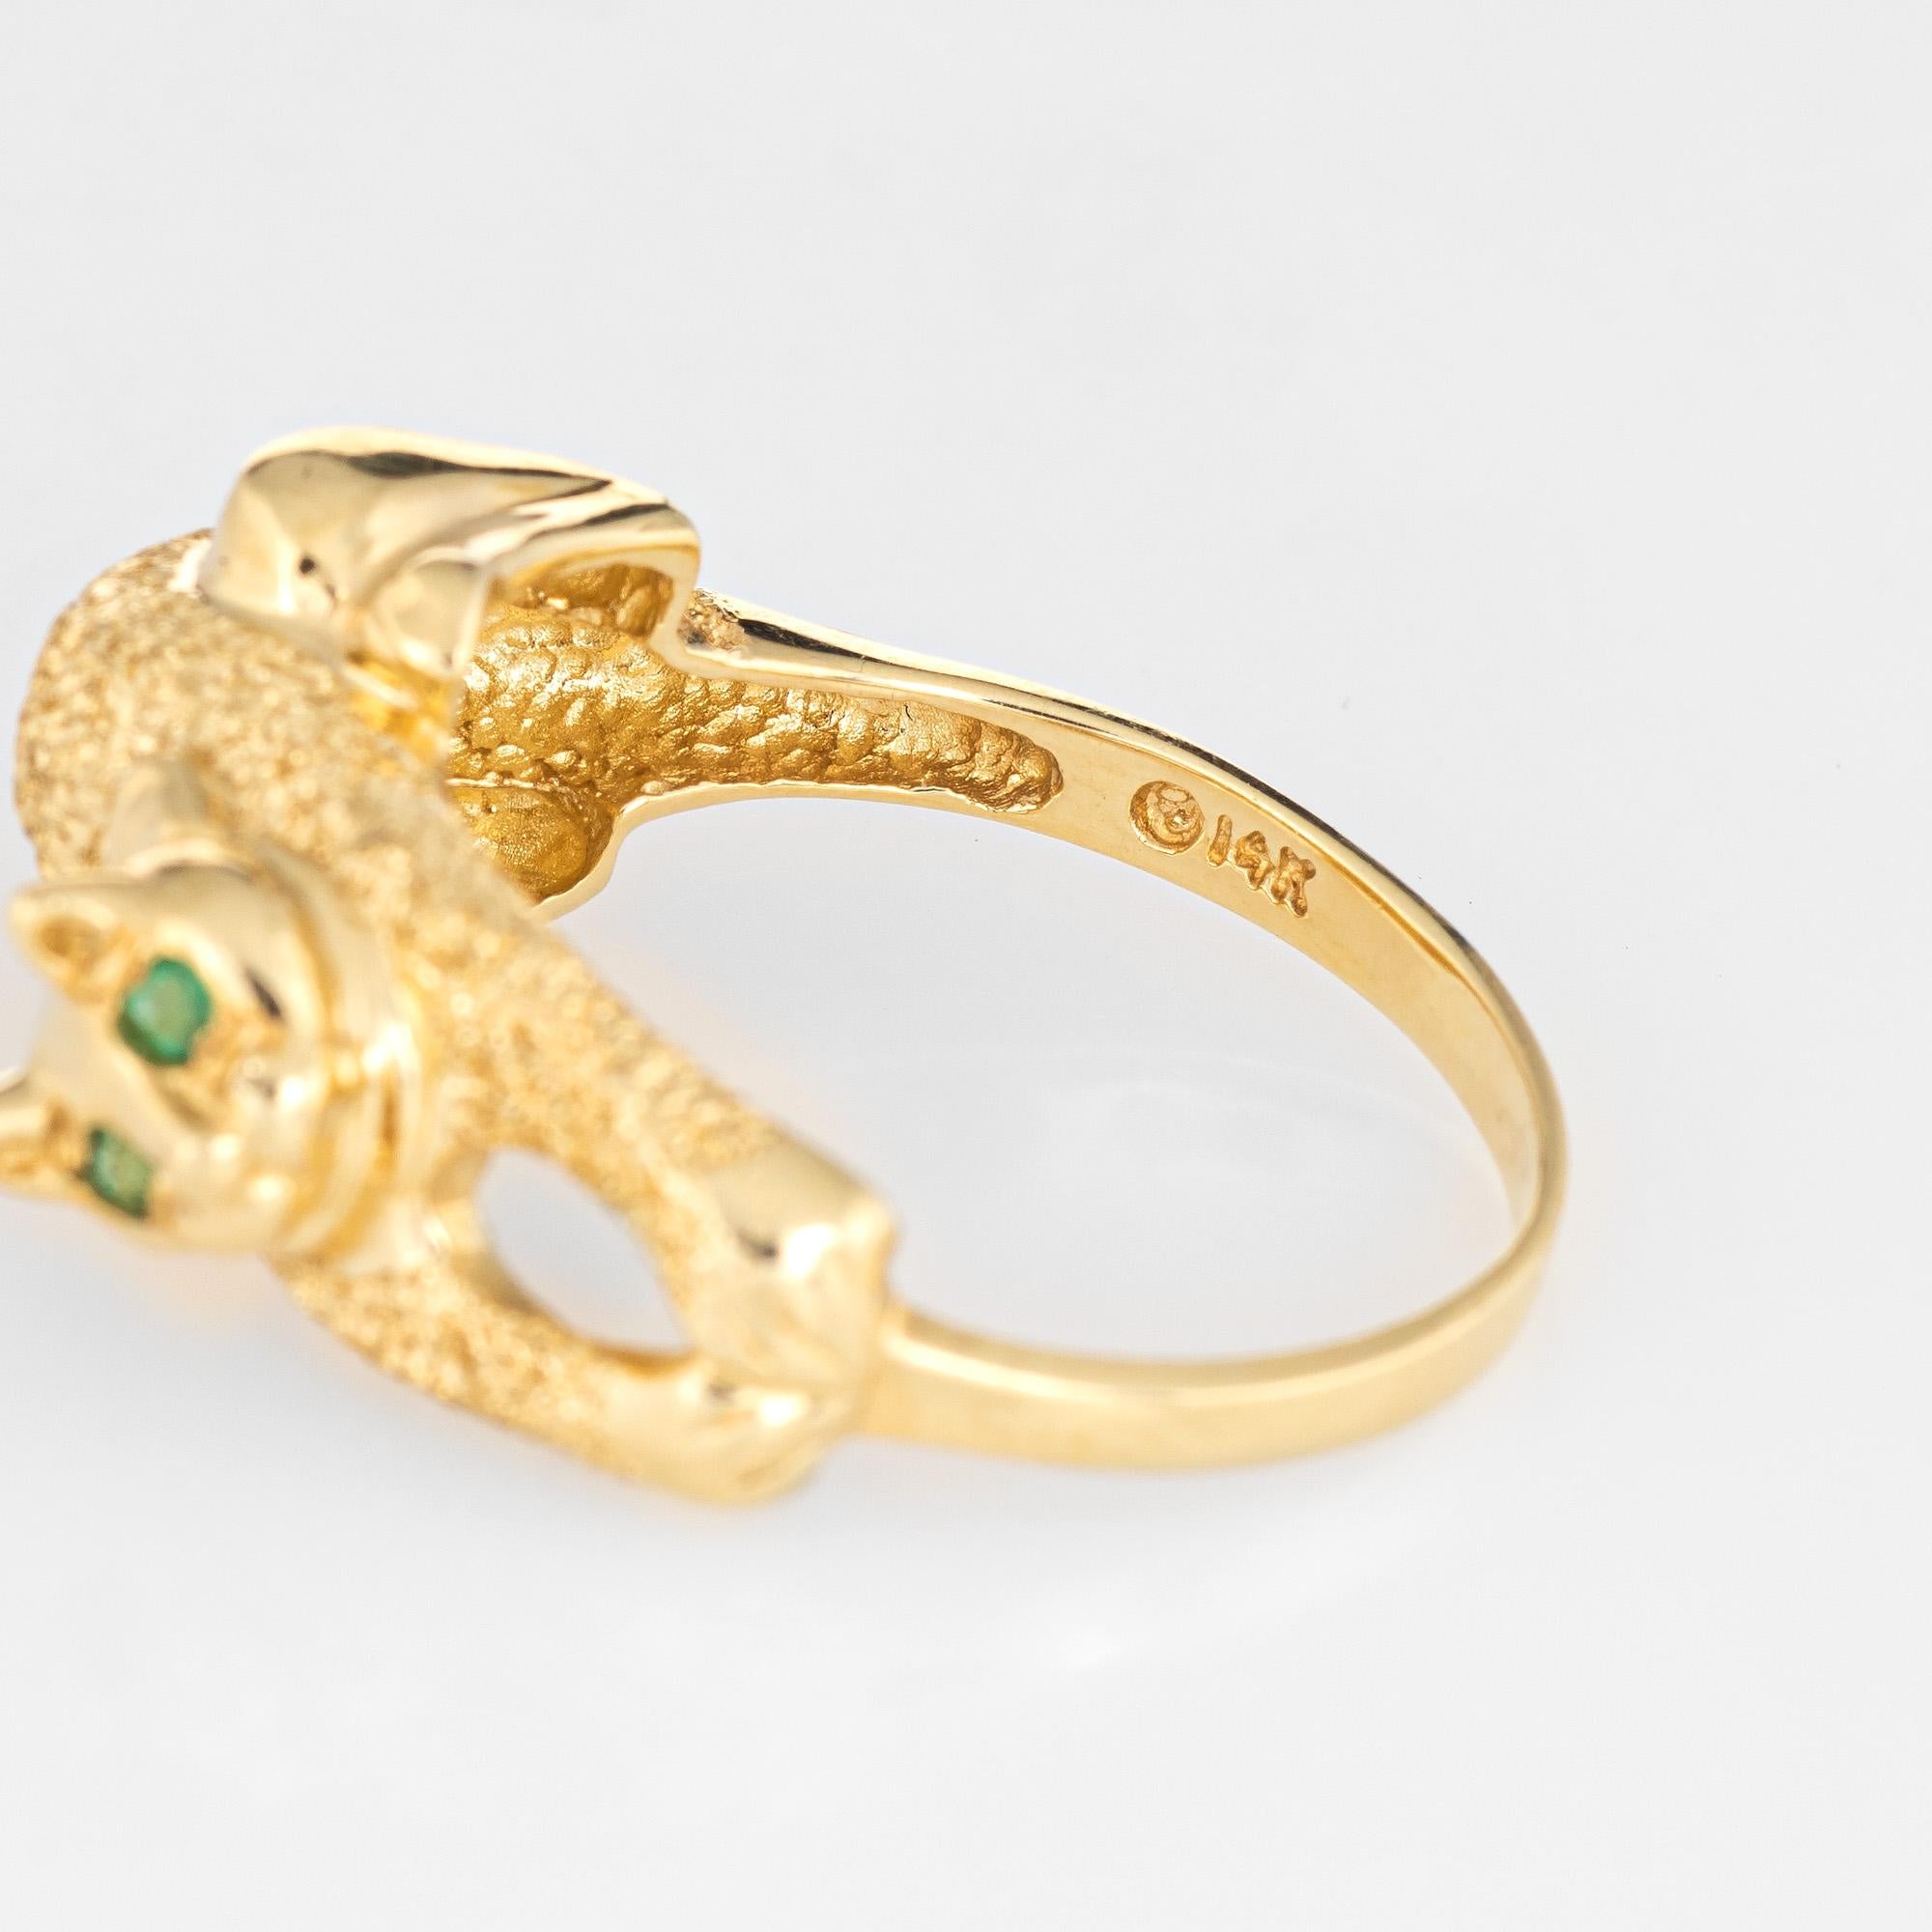 Round Cut Kitty Cat Ring Emerald Eyes Estate 14 Karat Yellow Gold Fine Animal Jewelry